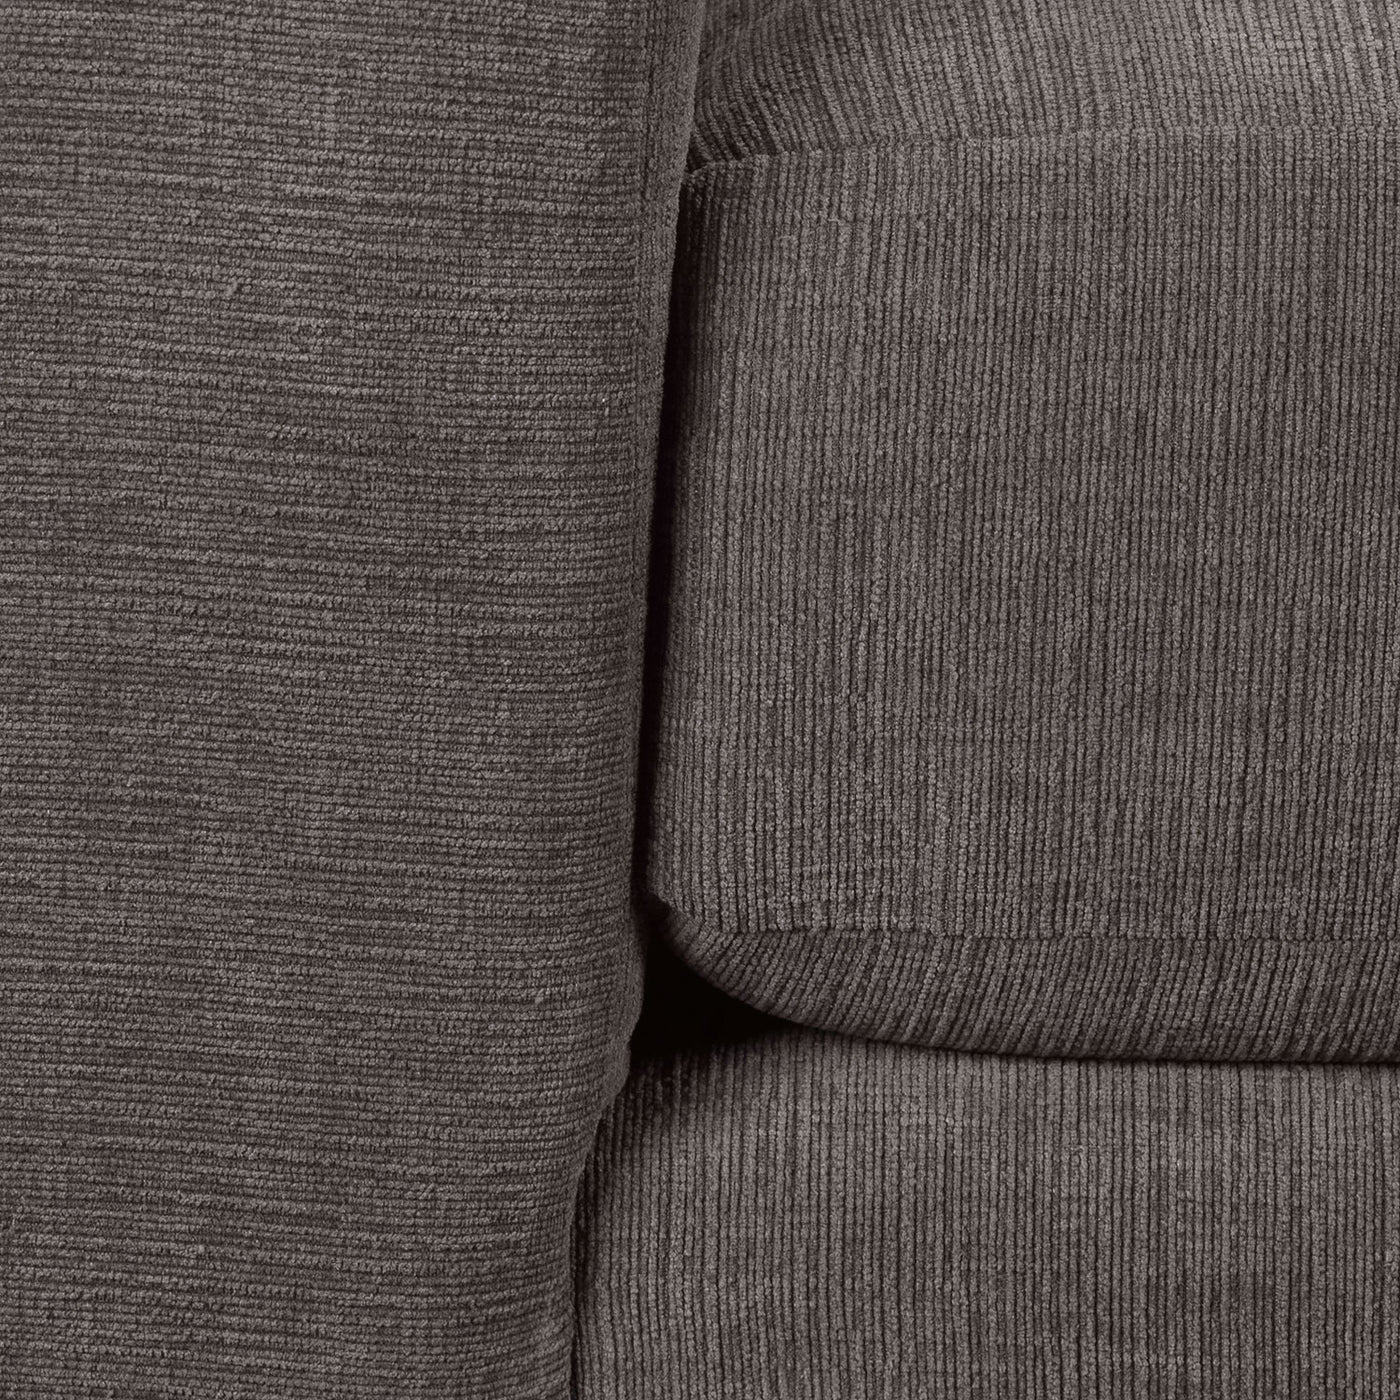 Fava Sofa and Loveseat Set - Grey